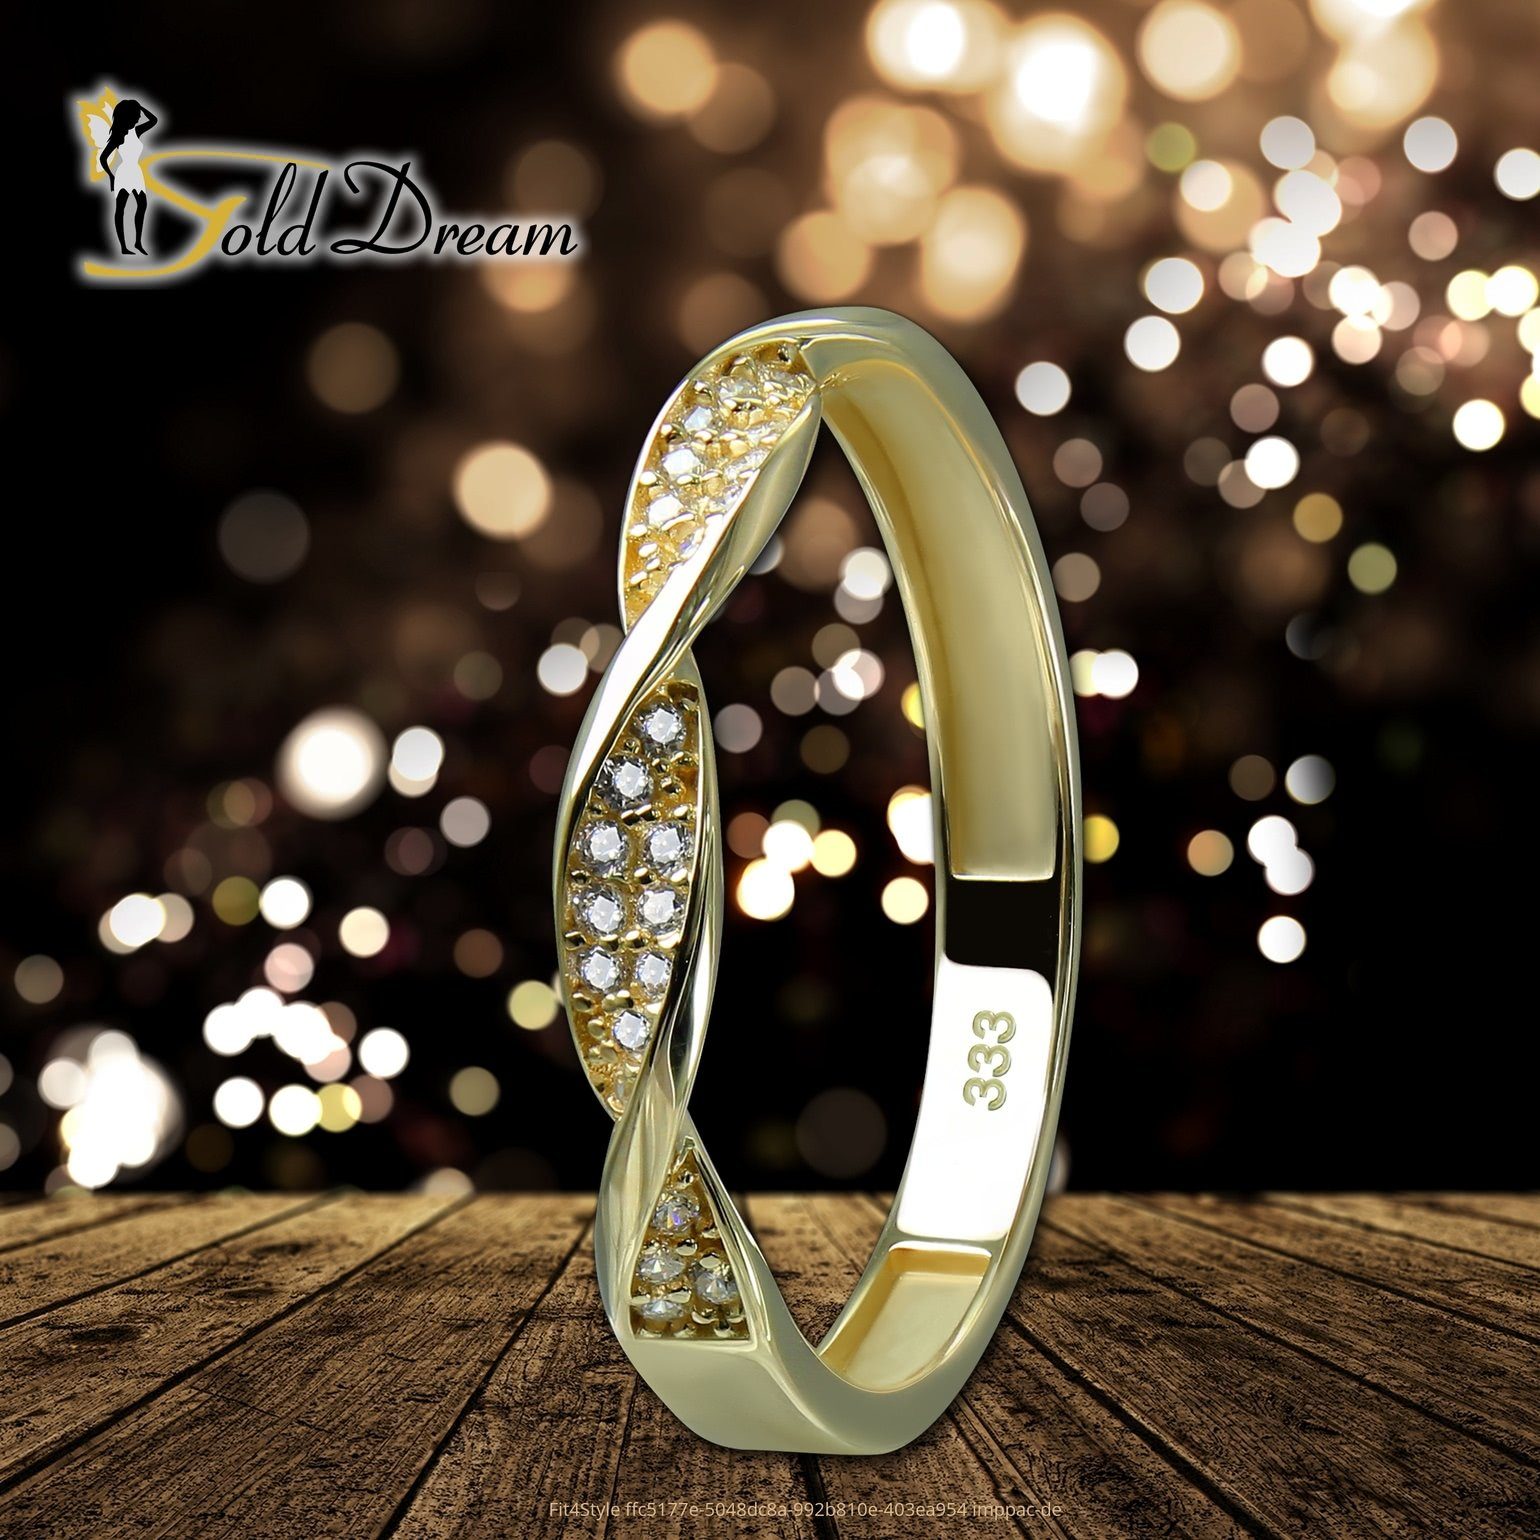 weiß GoldDream 333 Farbe: Gr.58 Twisted - 8 Karat, Ring Twisted GoldDream Gold Goldring gold, Gelbgold (Fingerring), Damen Ring